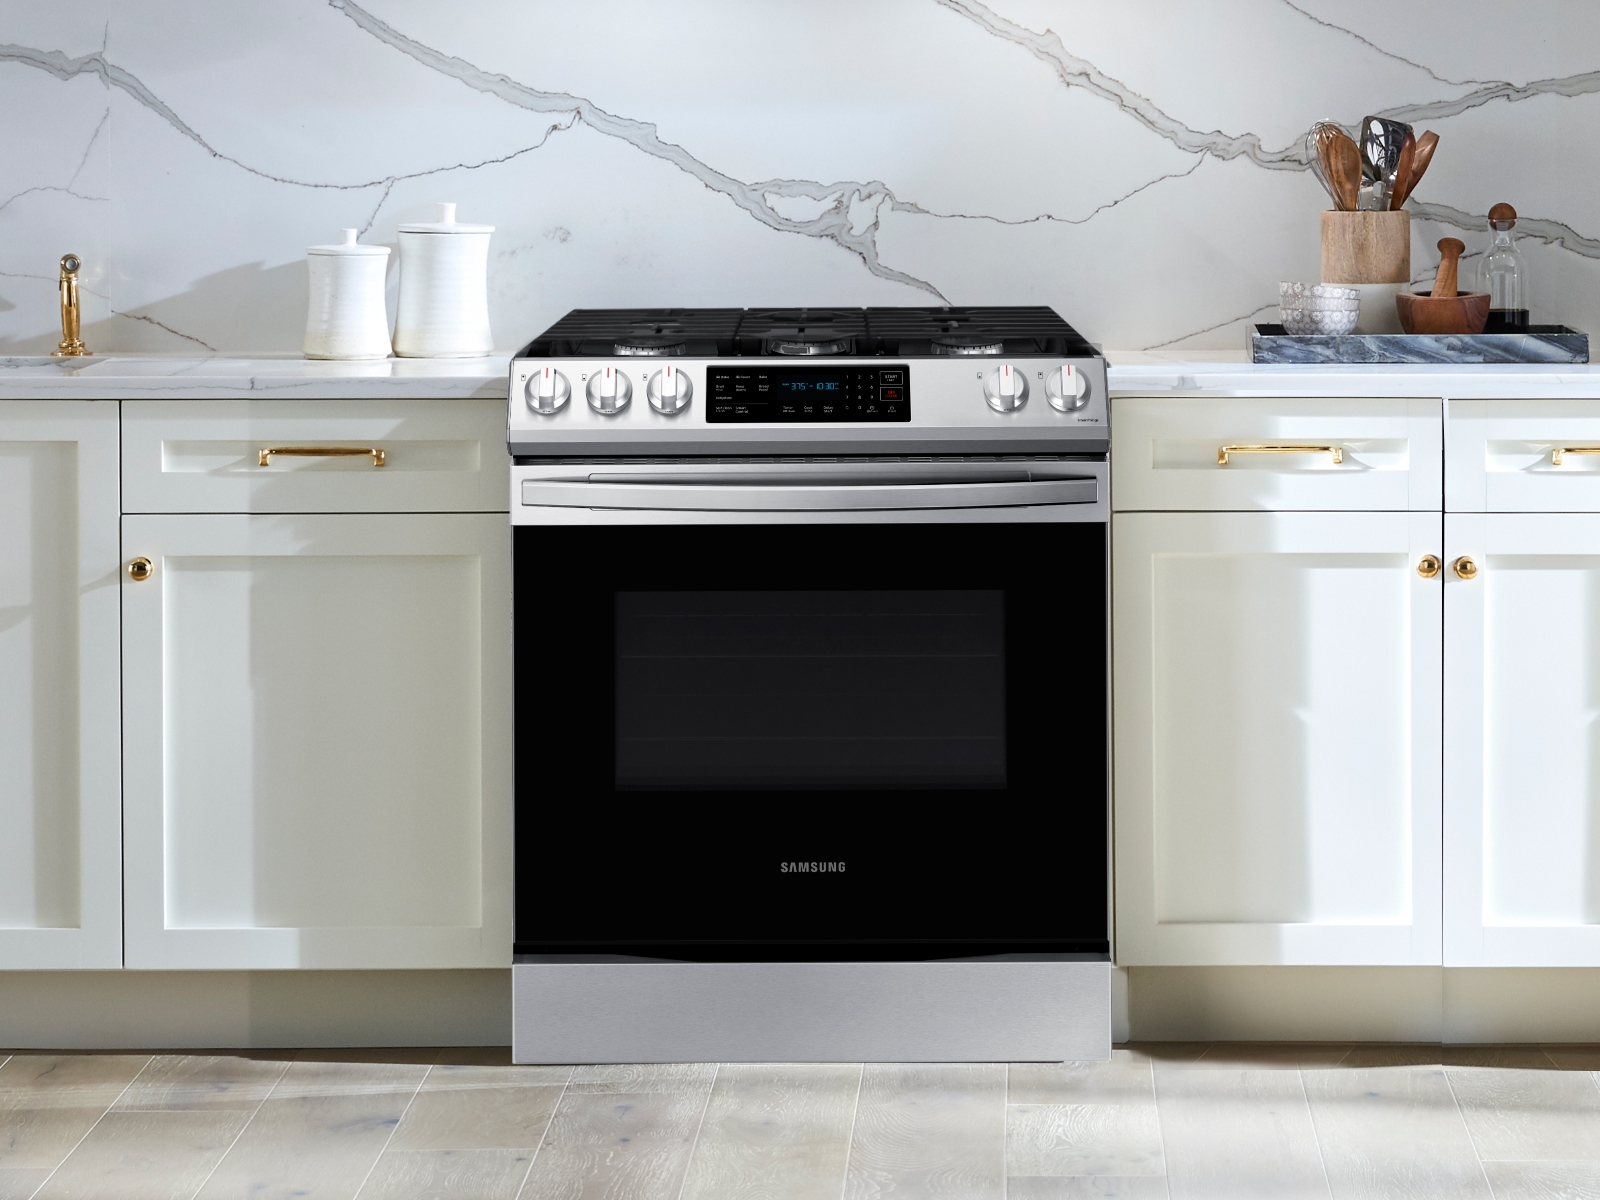 18” Dishwasher on wheels - appliances - by owner - sale - craigslist